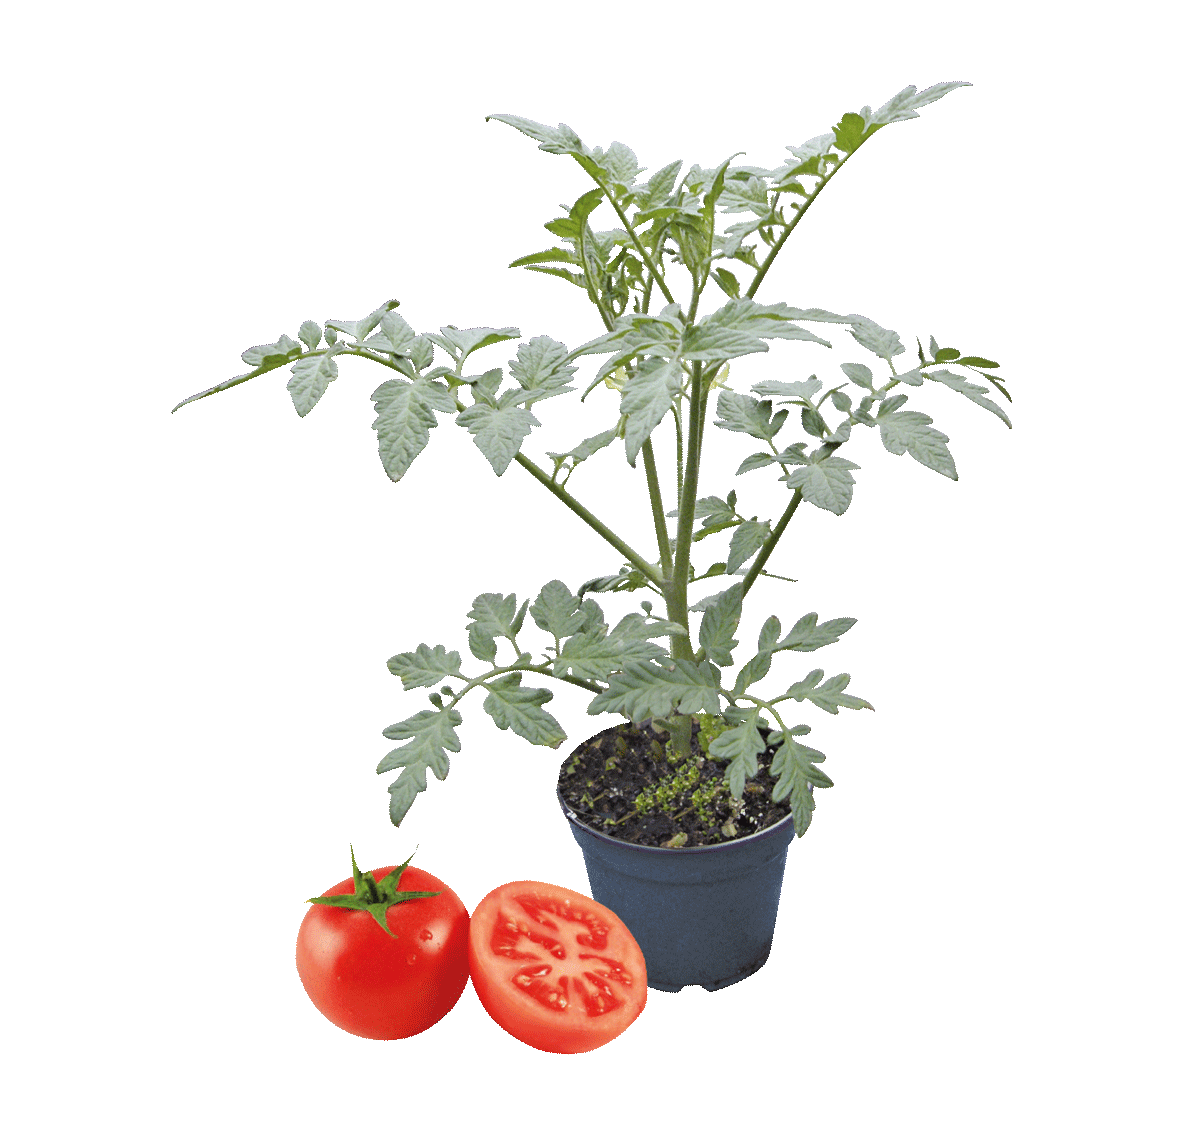 375233-Tomate-pomodoro